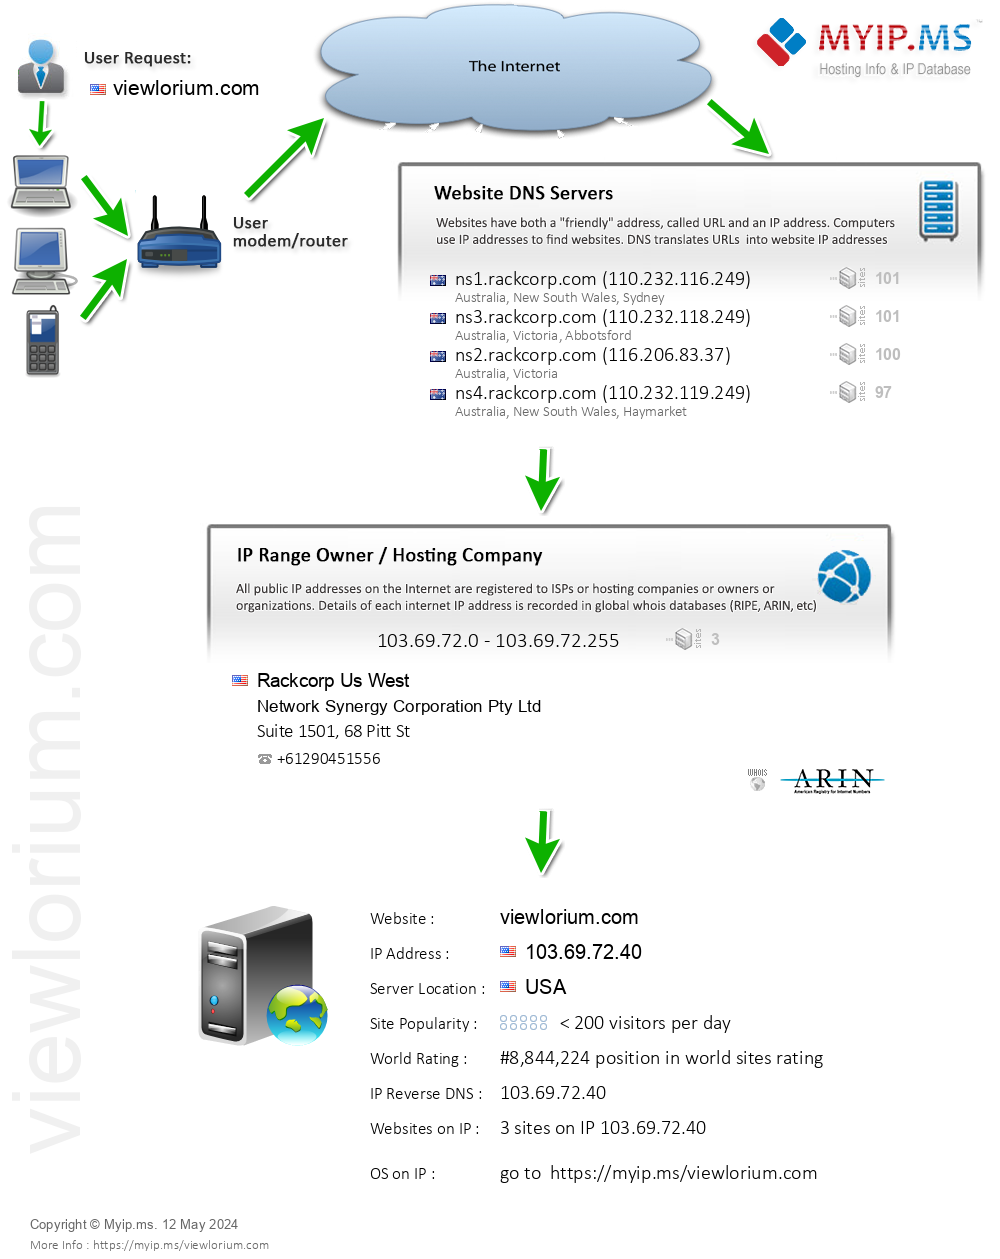 Viewlorium.com - Website Hosting Visual IP Diagram